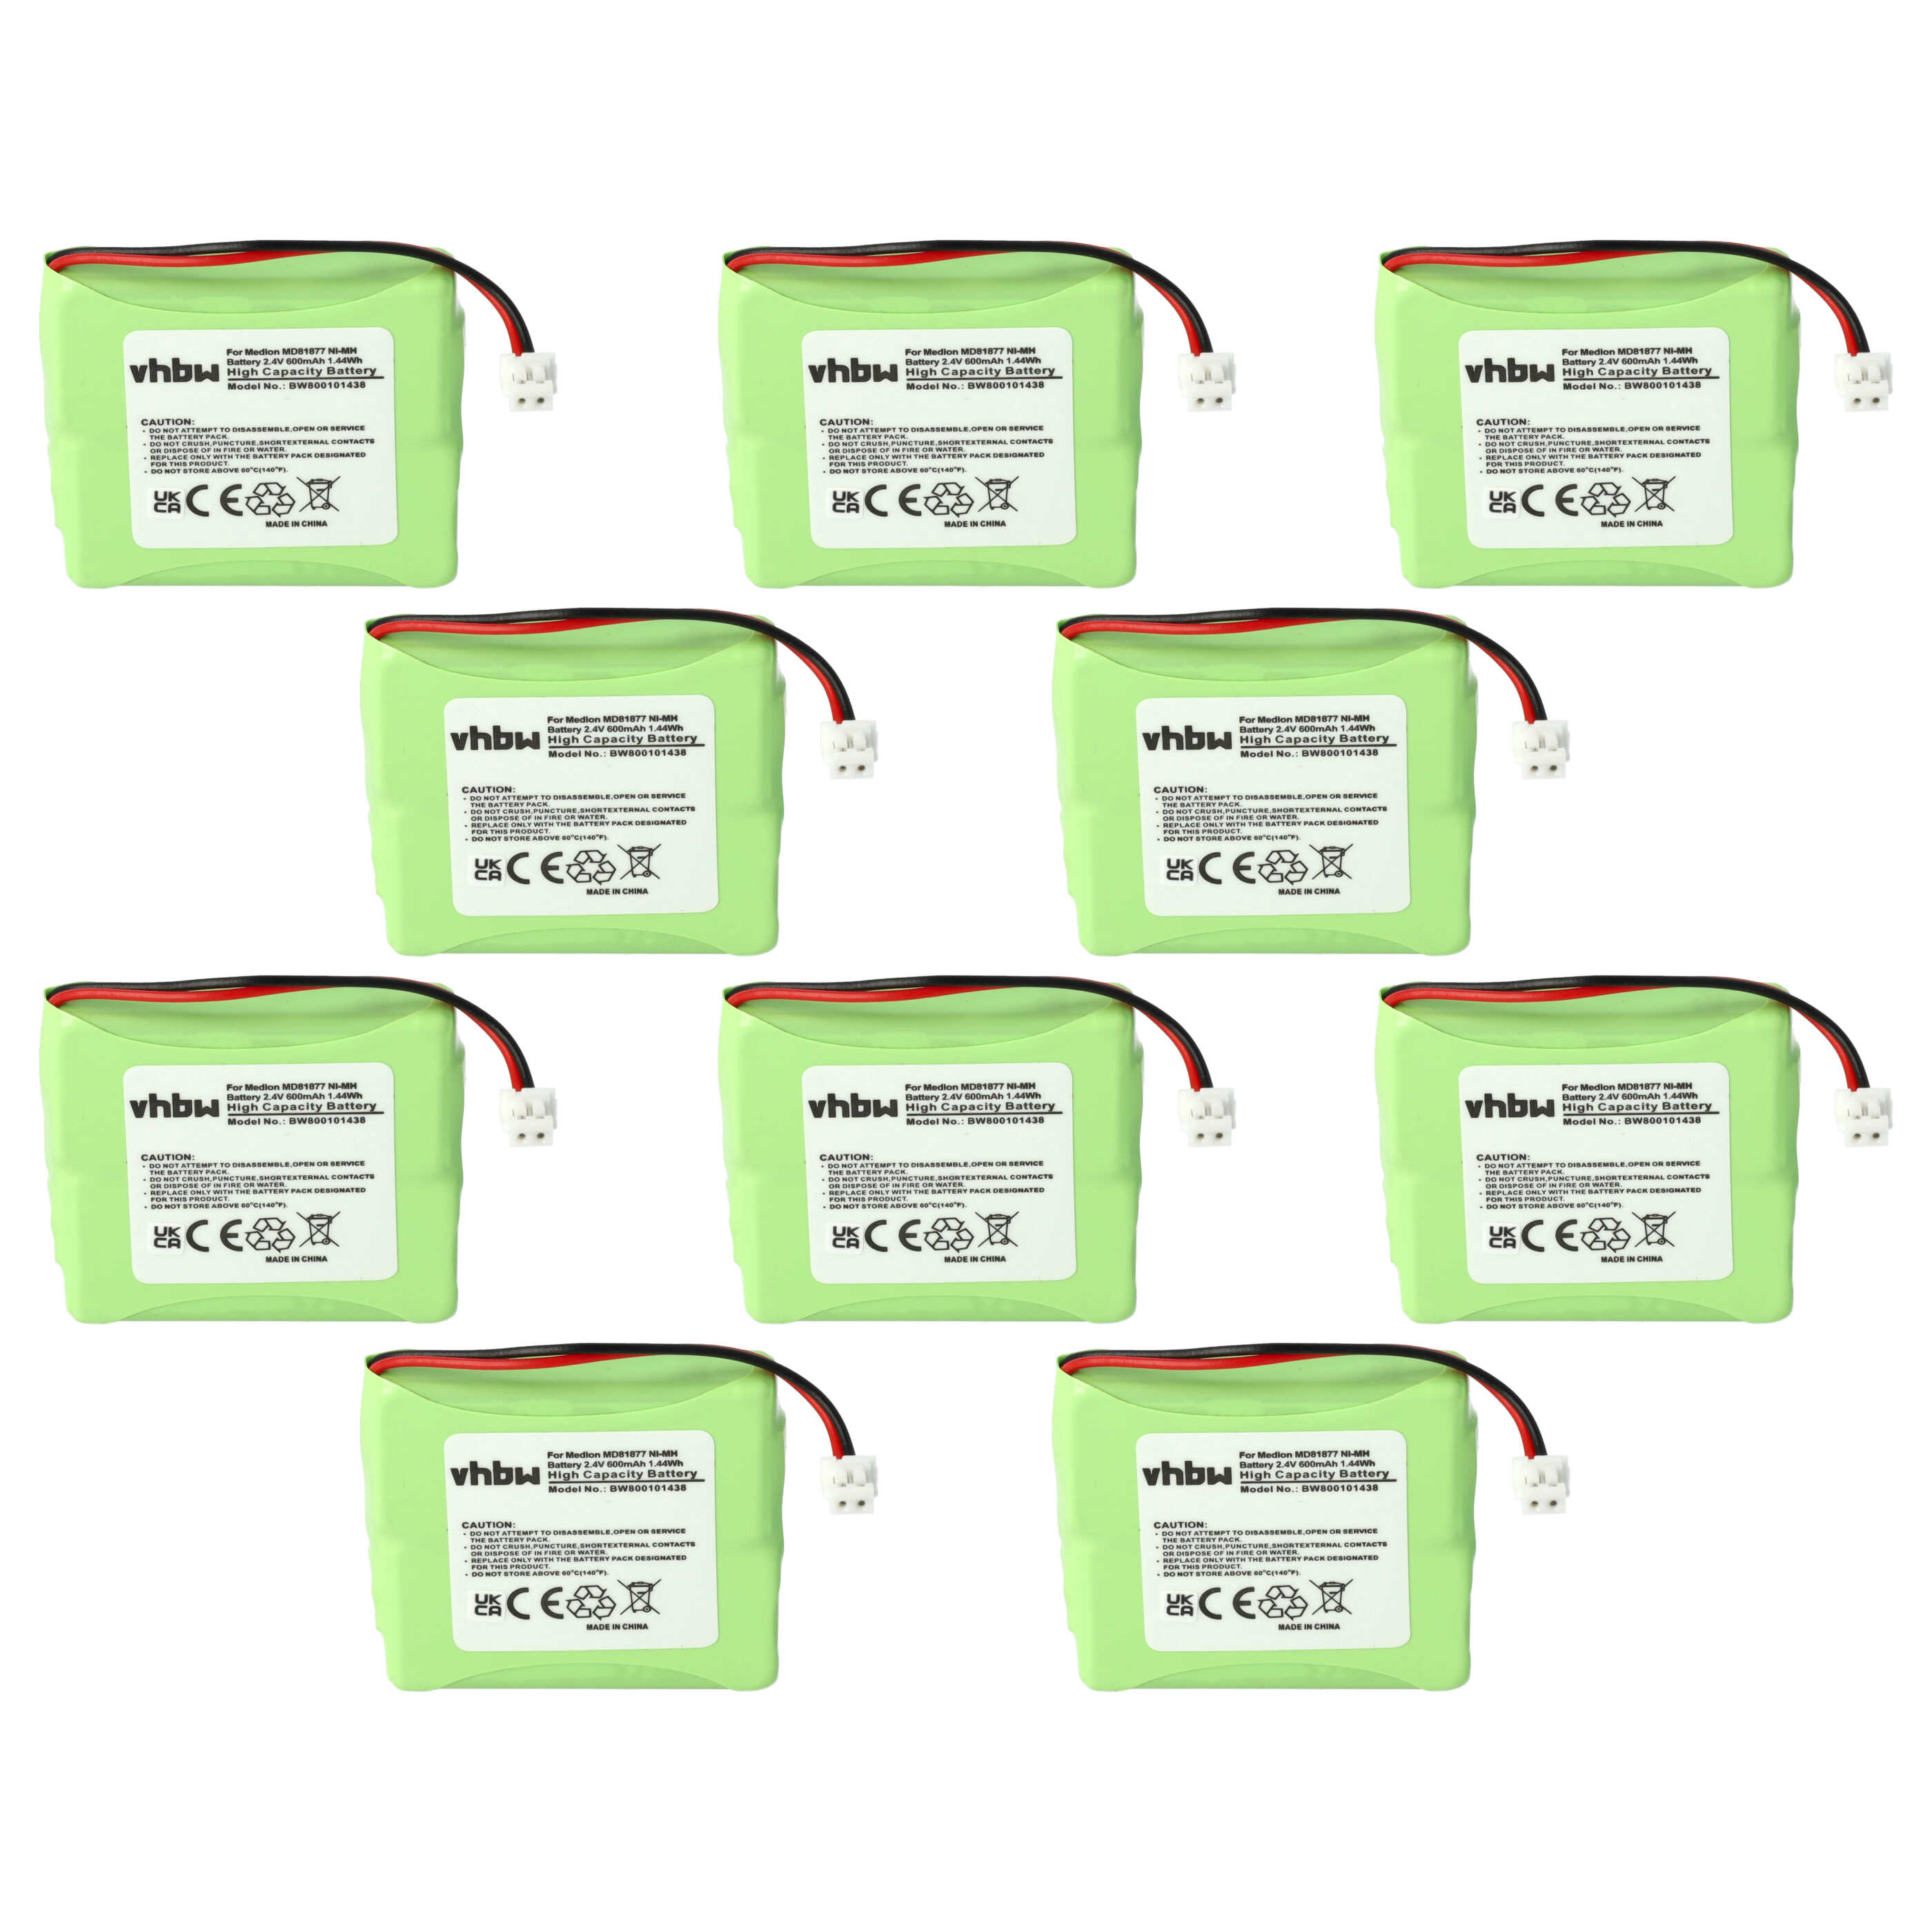 10x Batería reemplaza GP0827, 5M702BMX, GP0748, GP0747, GP0735 para teléfono fijo Telstra - 600 mAh 2,4 V NiMH